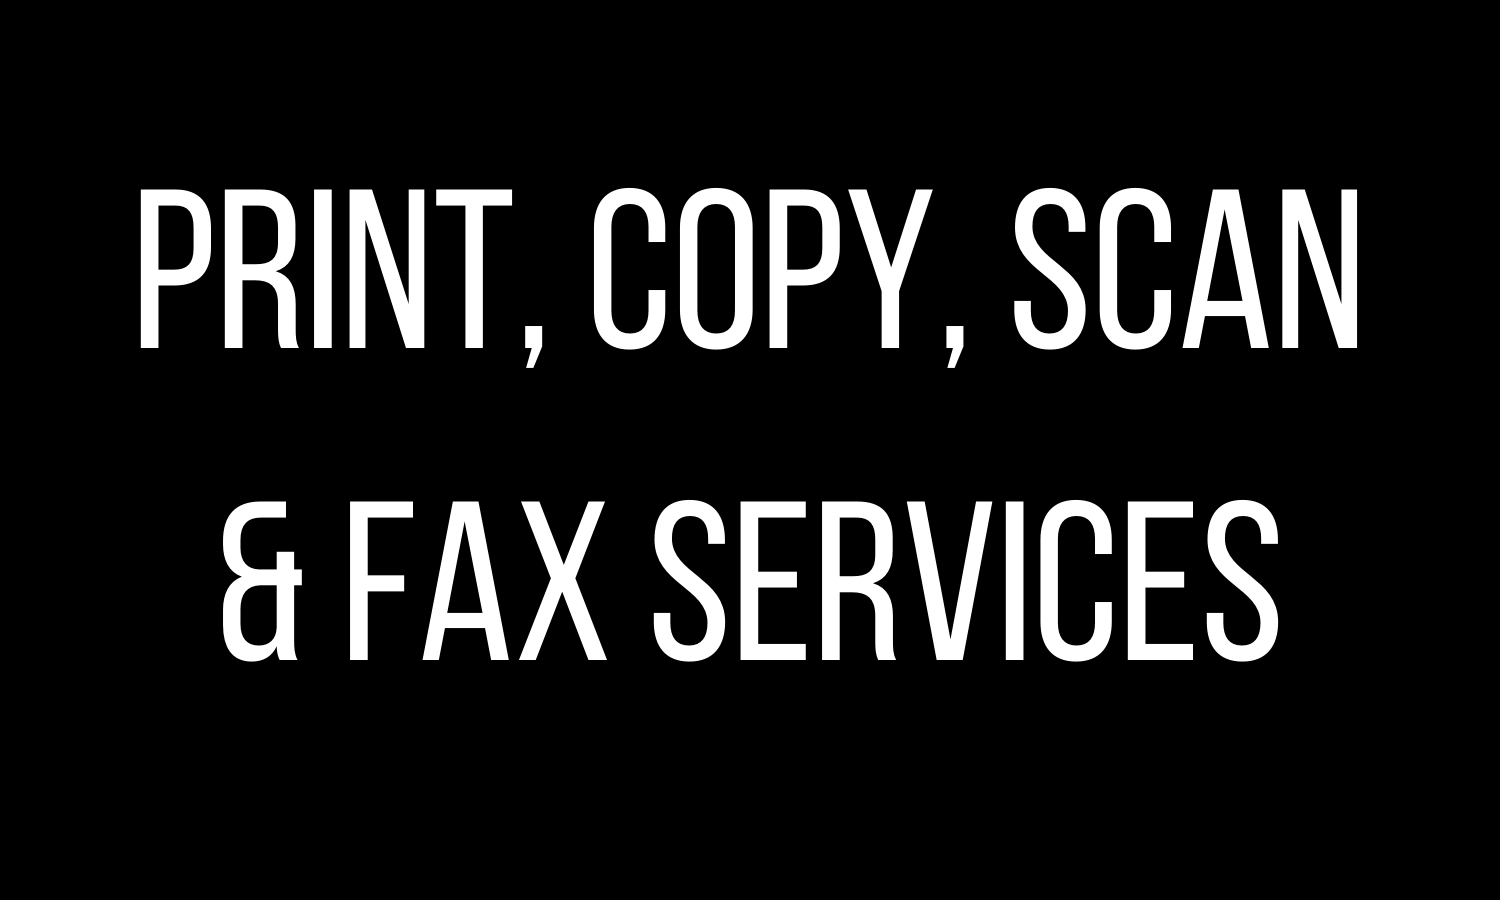 Print, Copy, Scan, Fax